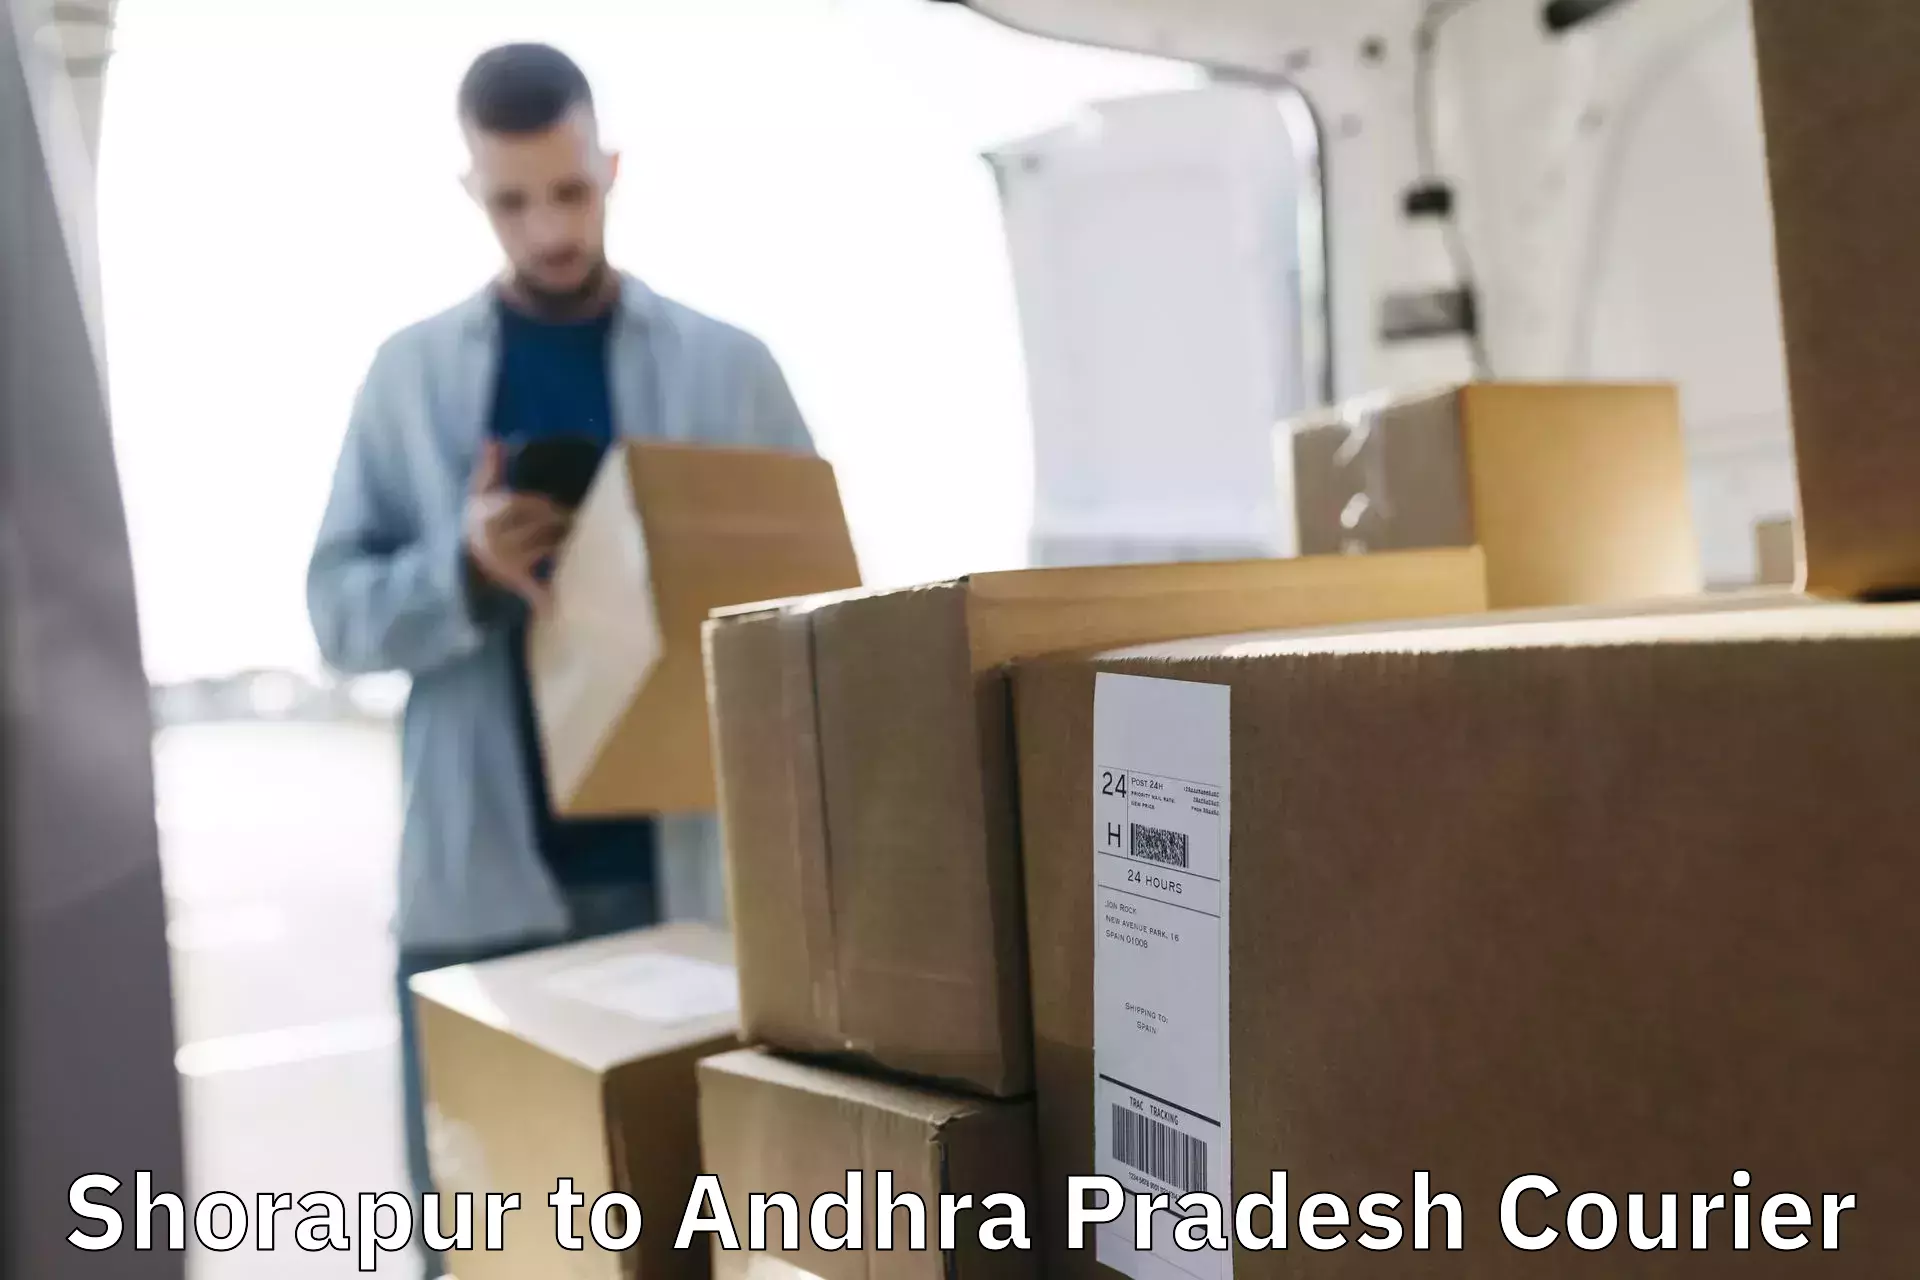 Parcel service for businesses Shorapur to Andhra Pradesh